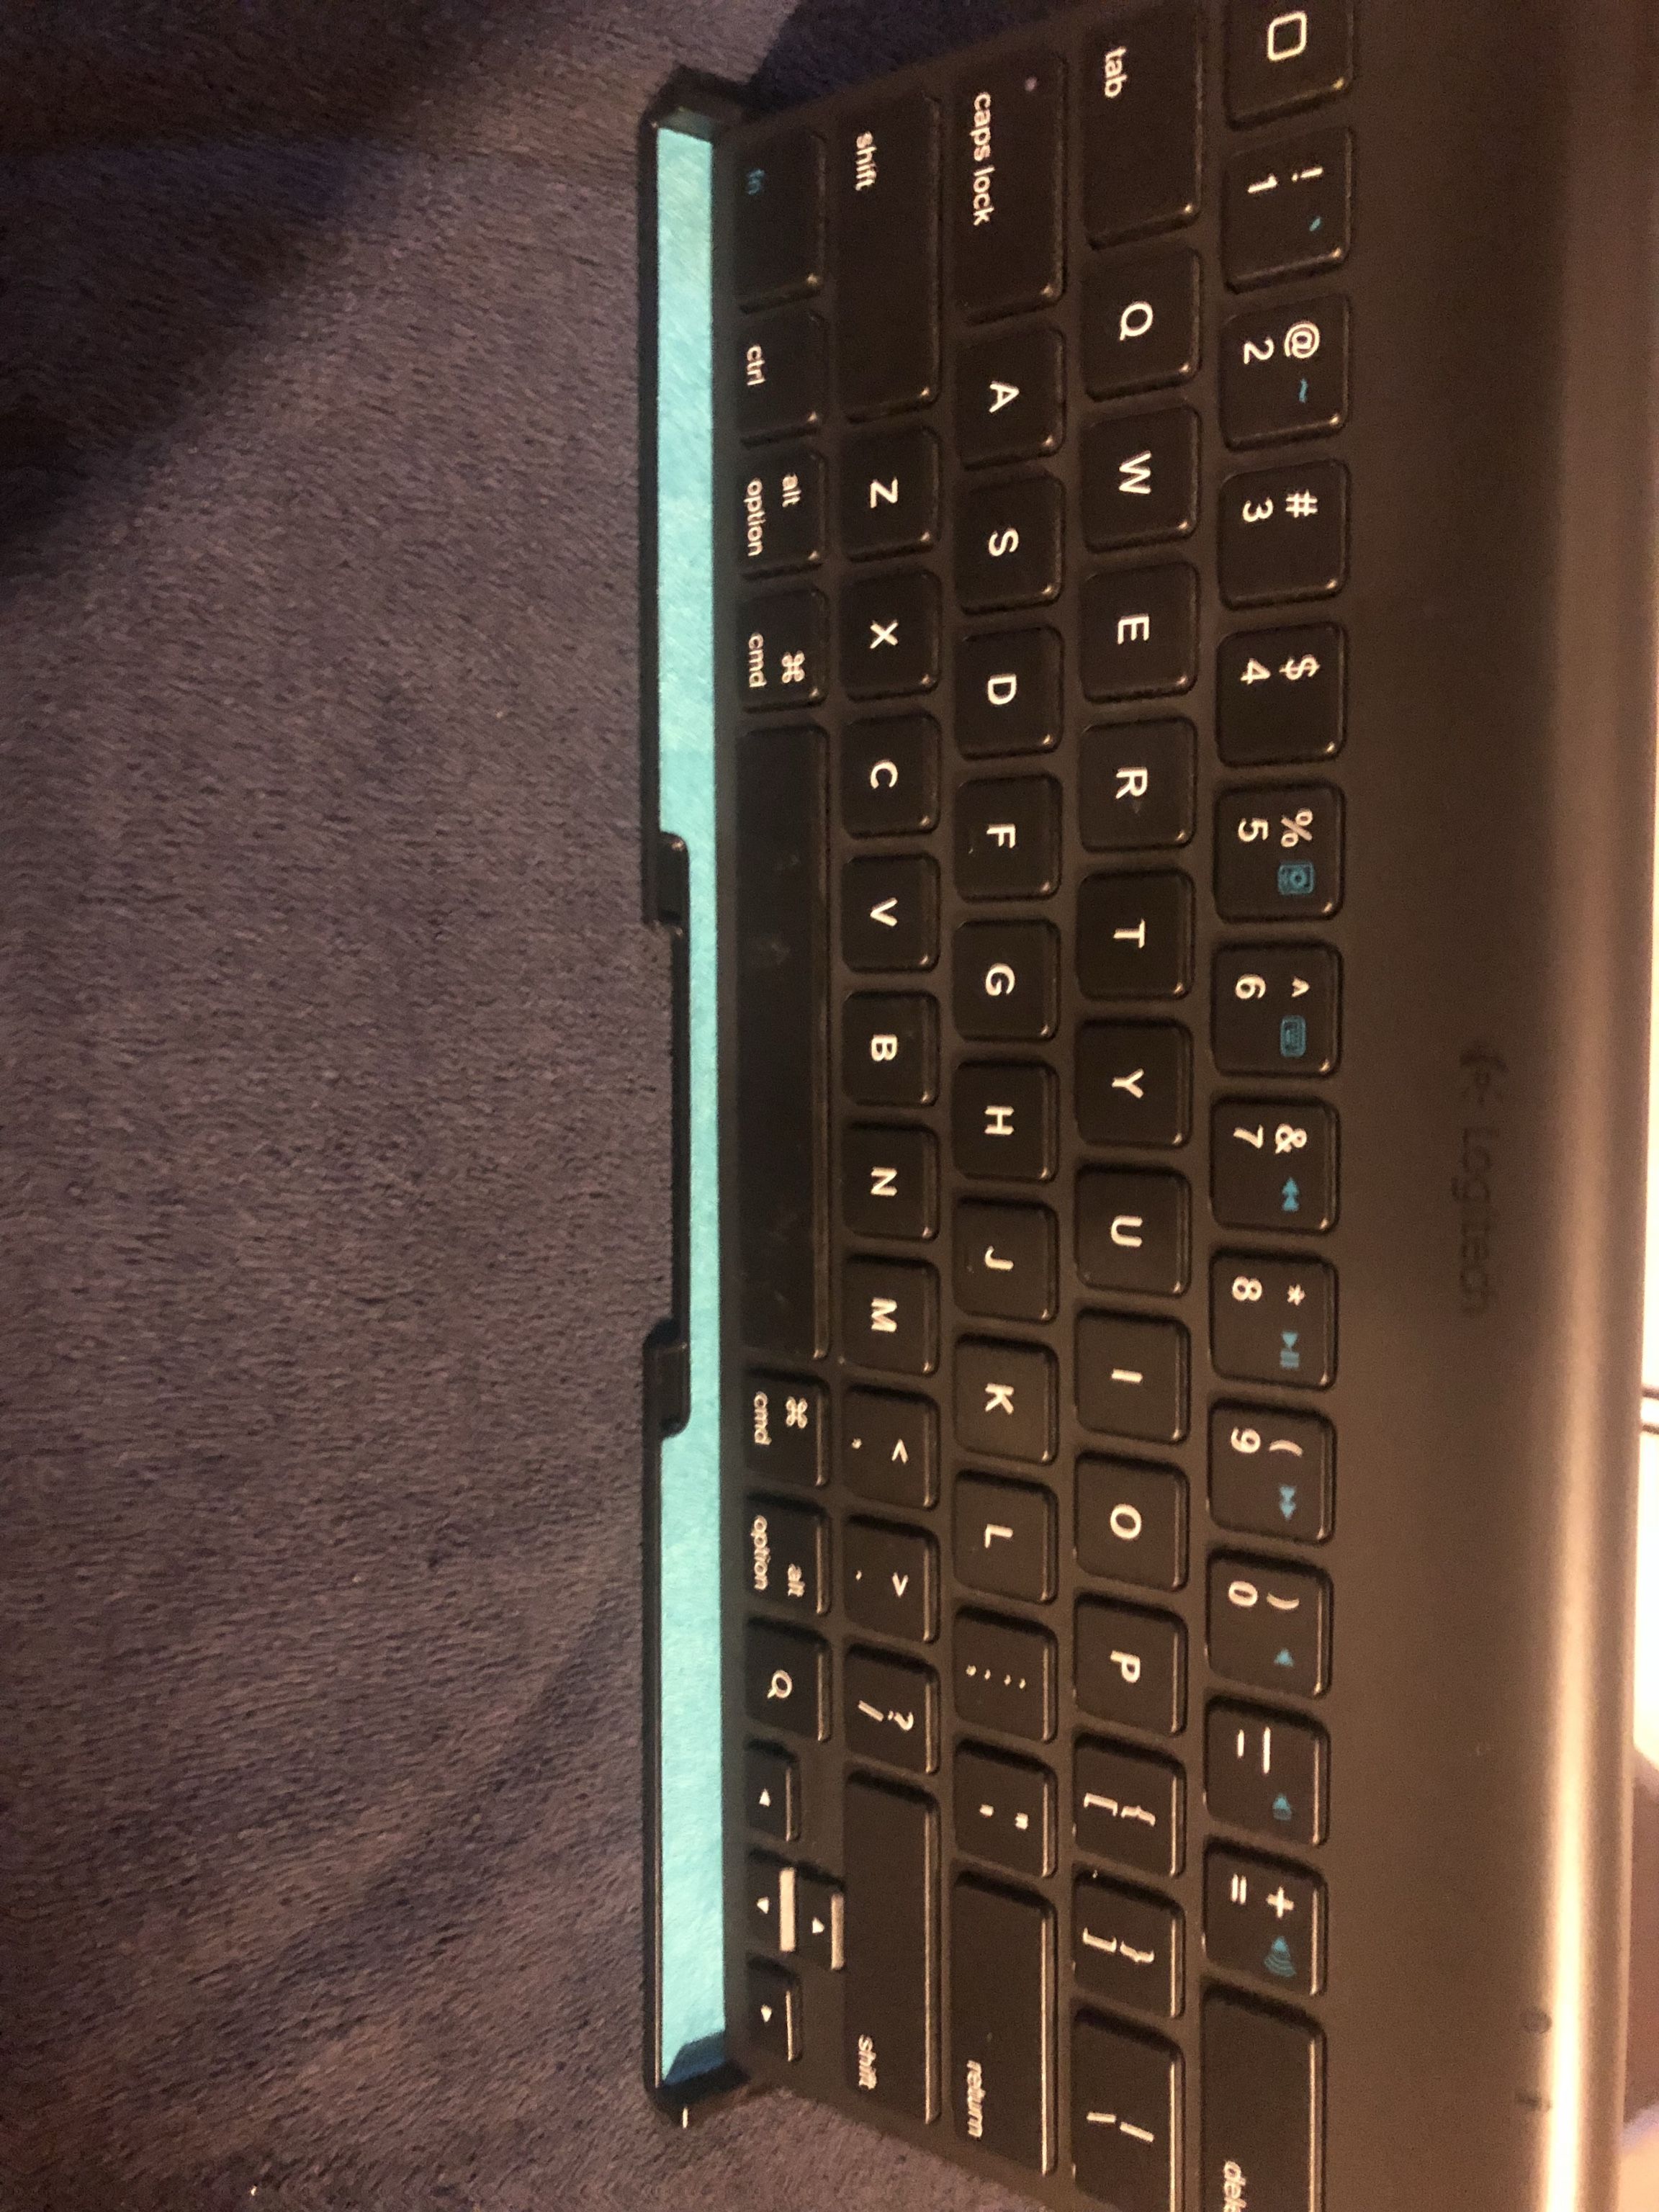 Logitech Keyboard For Ipad